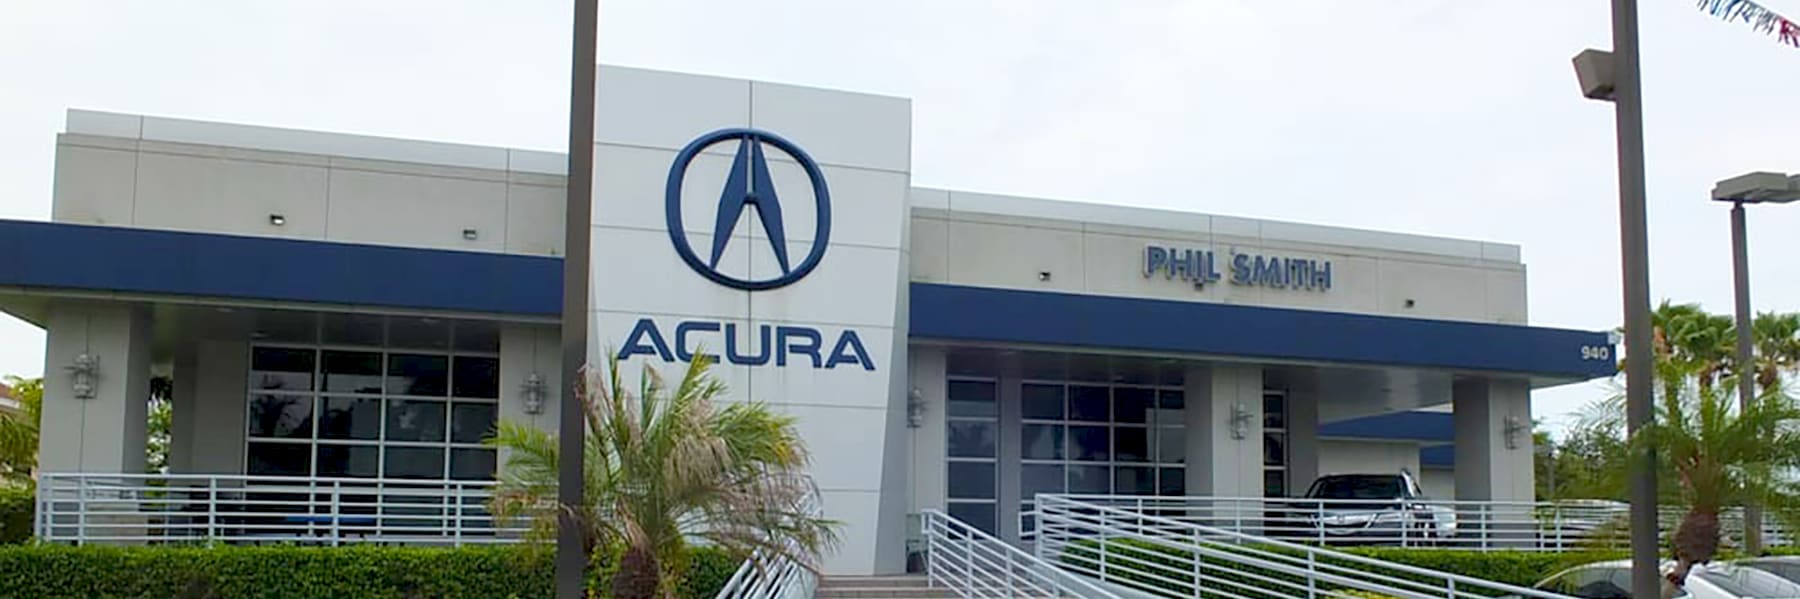 Phil Smith Acura dealership.